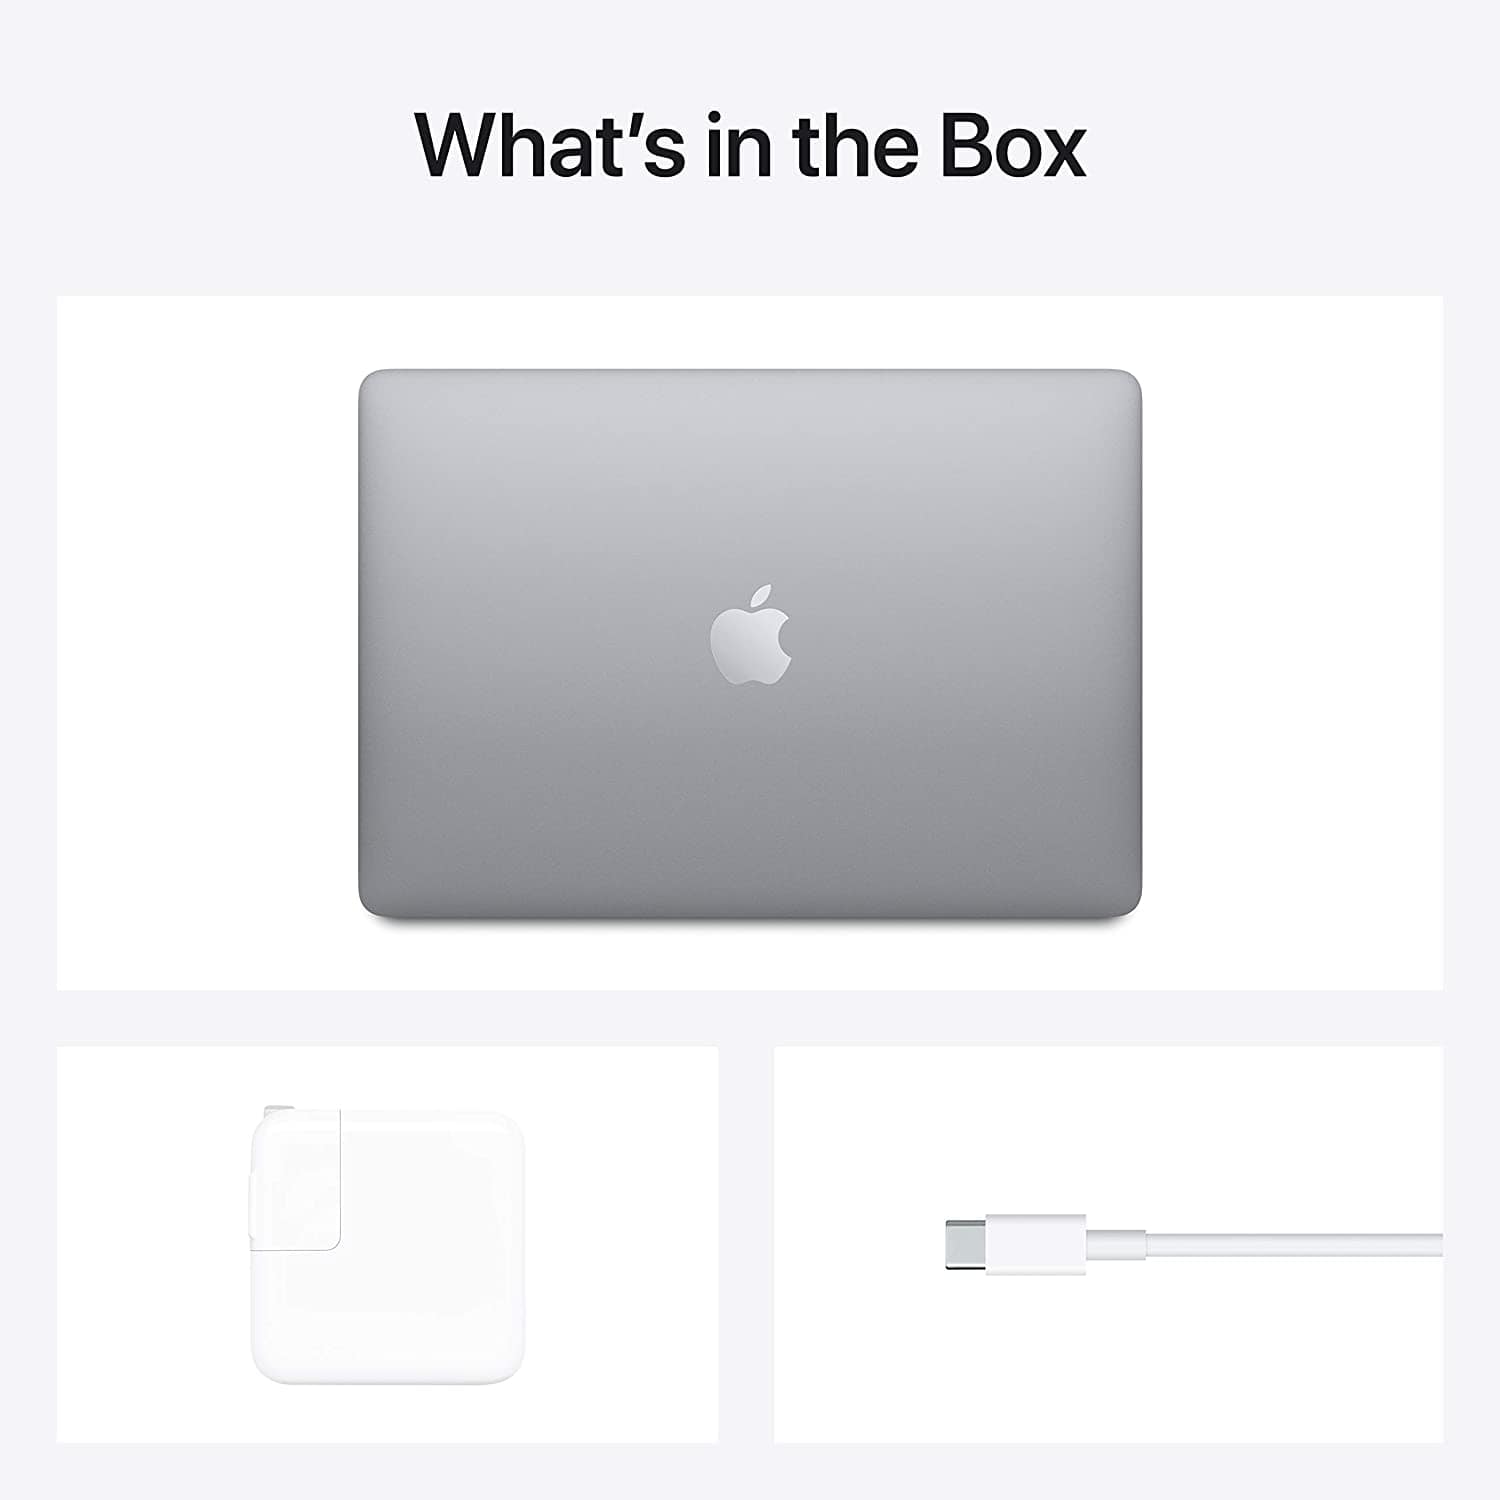 2020 Apple MacBook Air Laptop 8GB RAM, 256GB SSD Backlit Keyboard - Smart Tech Shopping